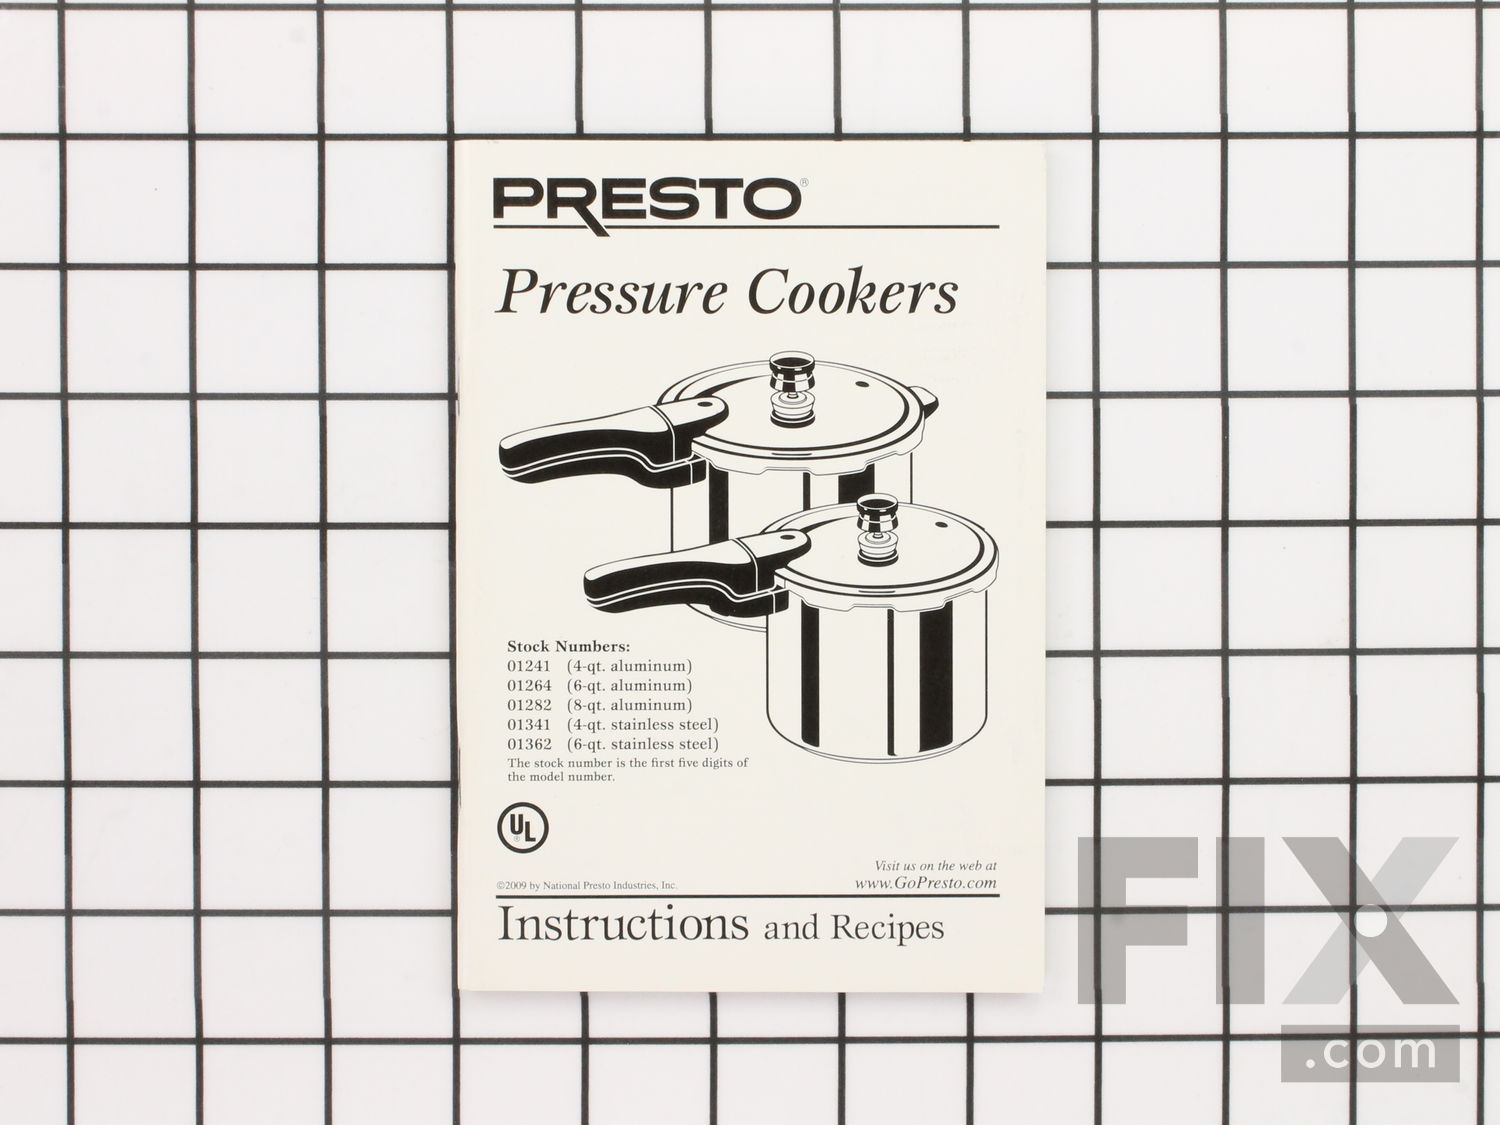 Presto National Presto Industries 4-Quart Aluminum Pressure Cooker